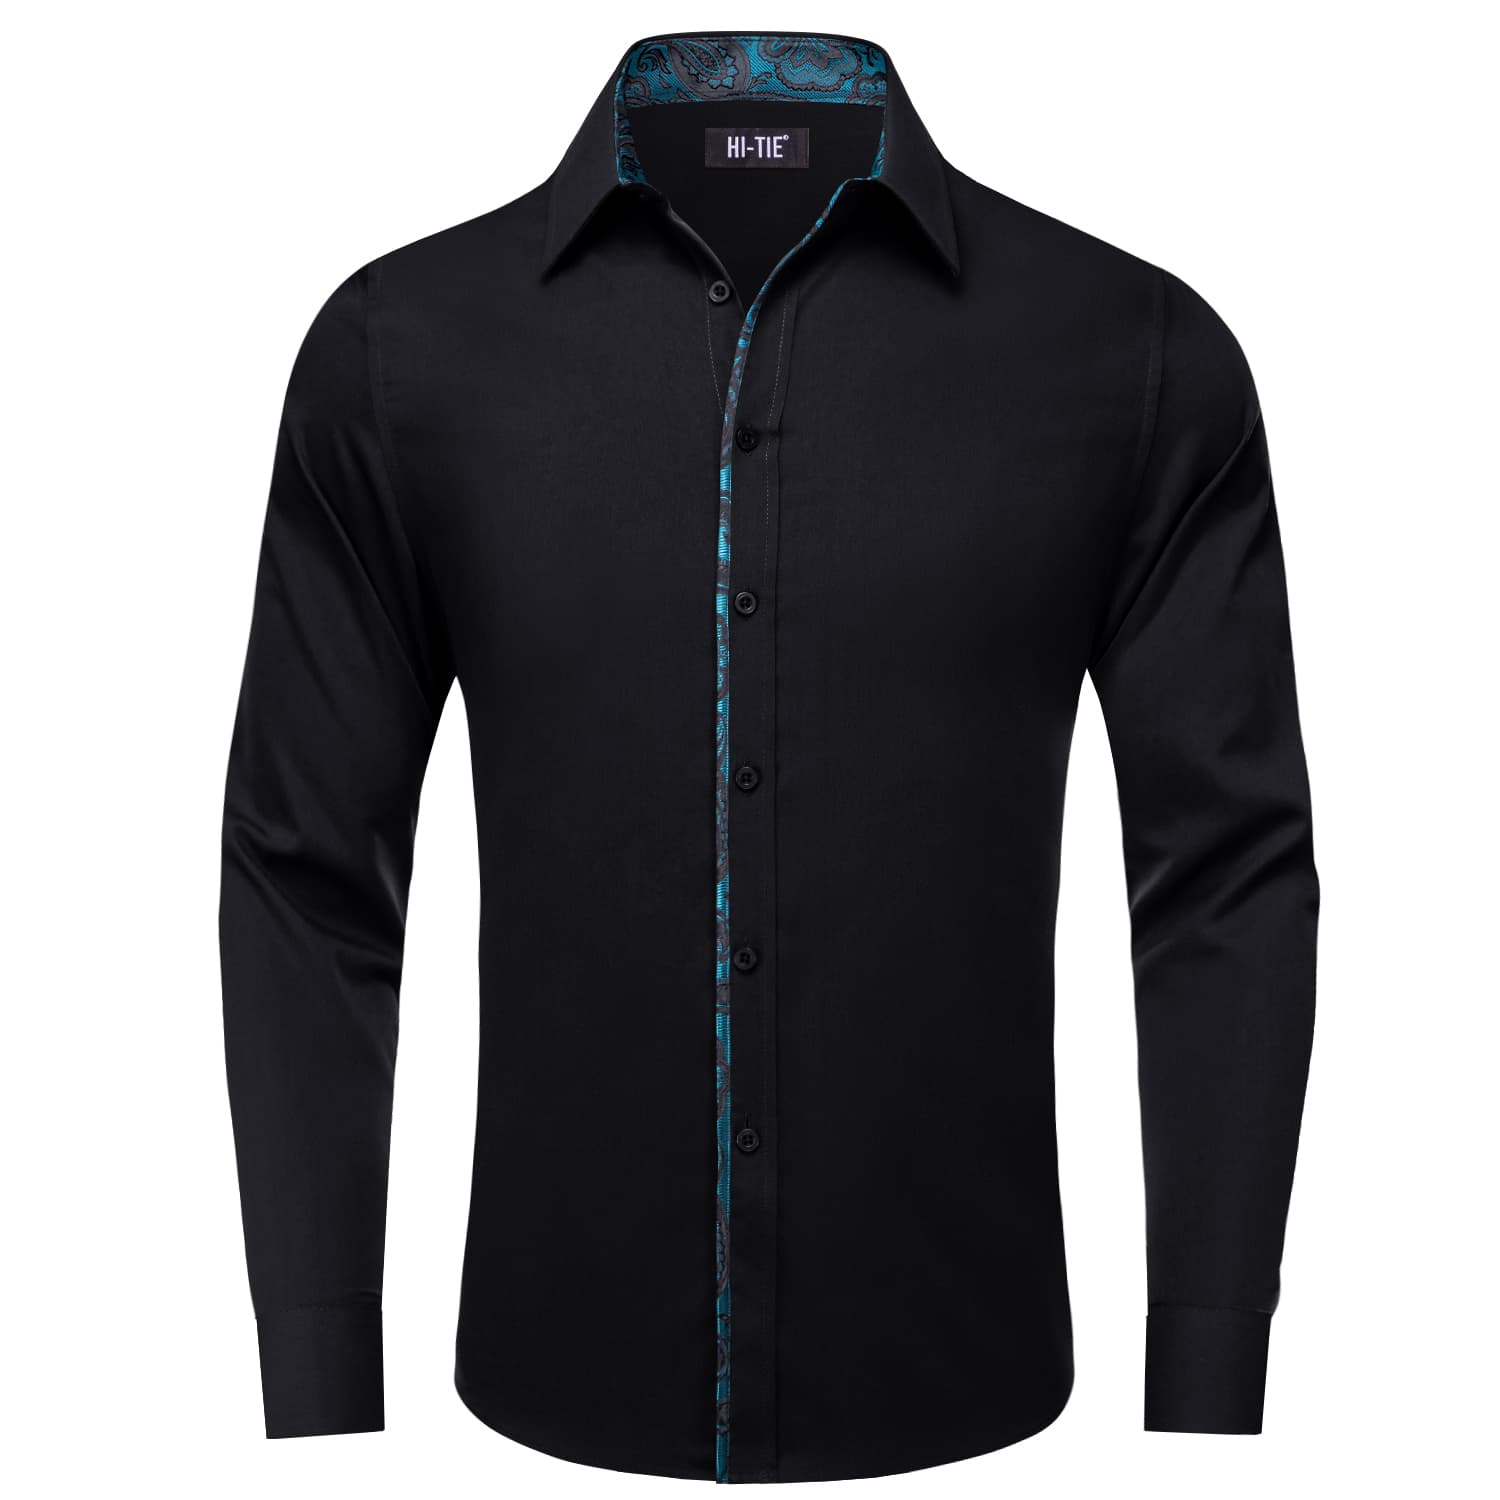 Hi-Tie Black Shirt with Teal Jacquard Collar Solid Shirt